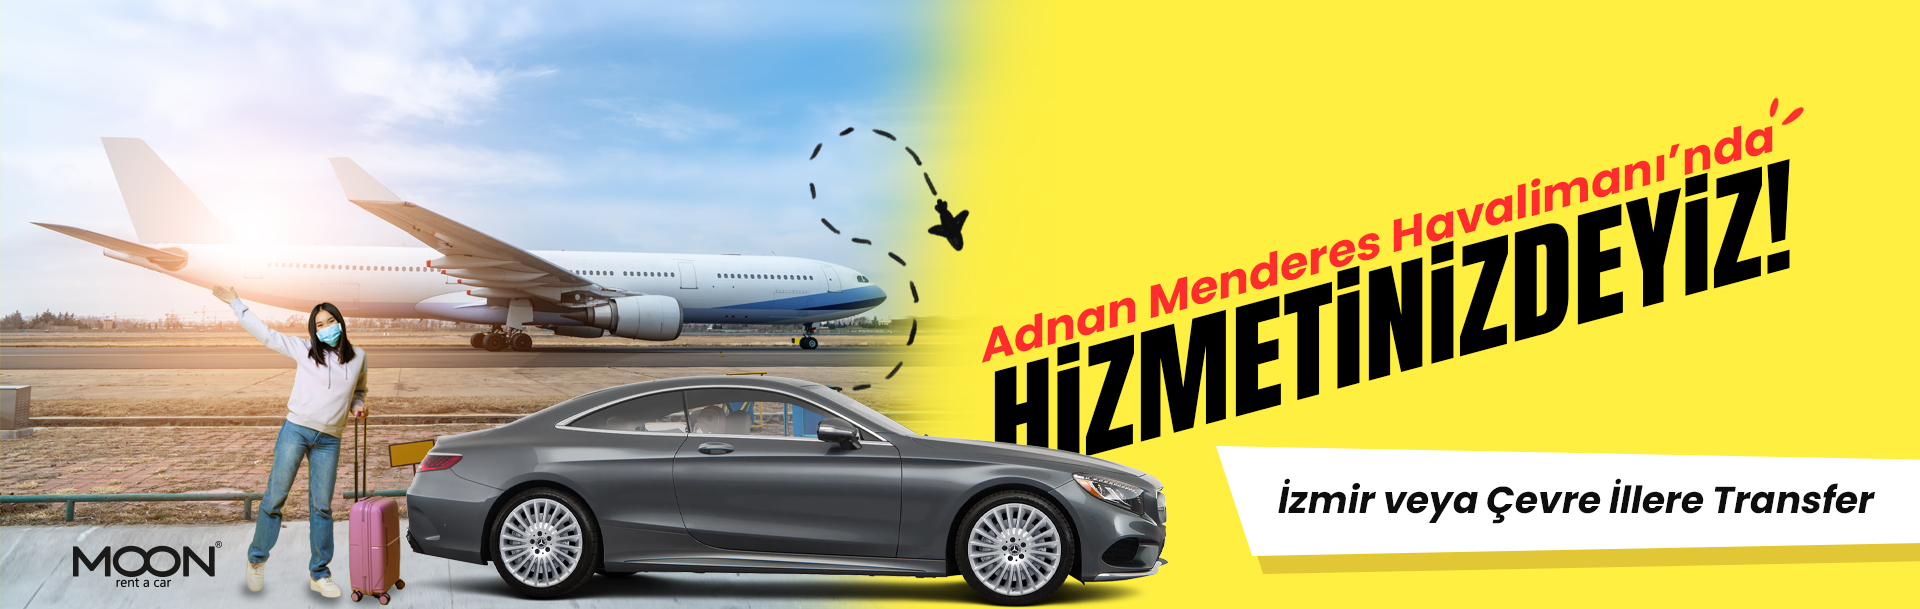 Adnan Menderes Havalimanı Transferi